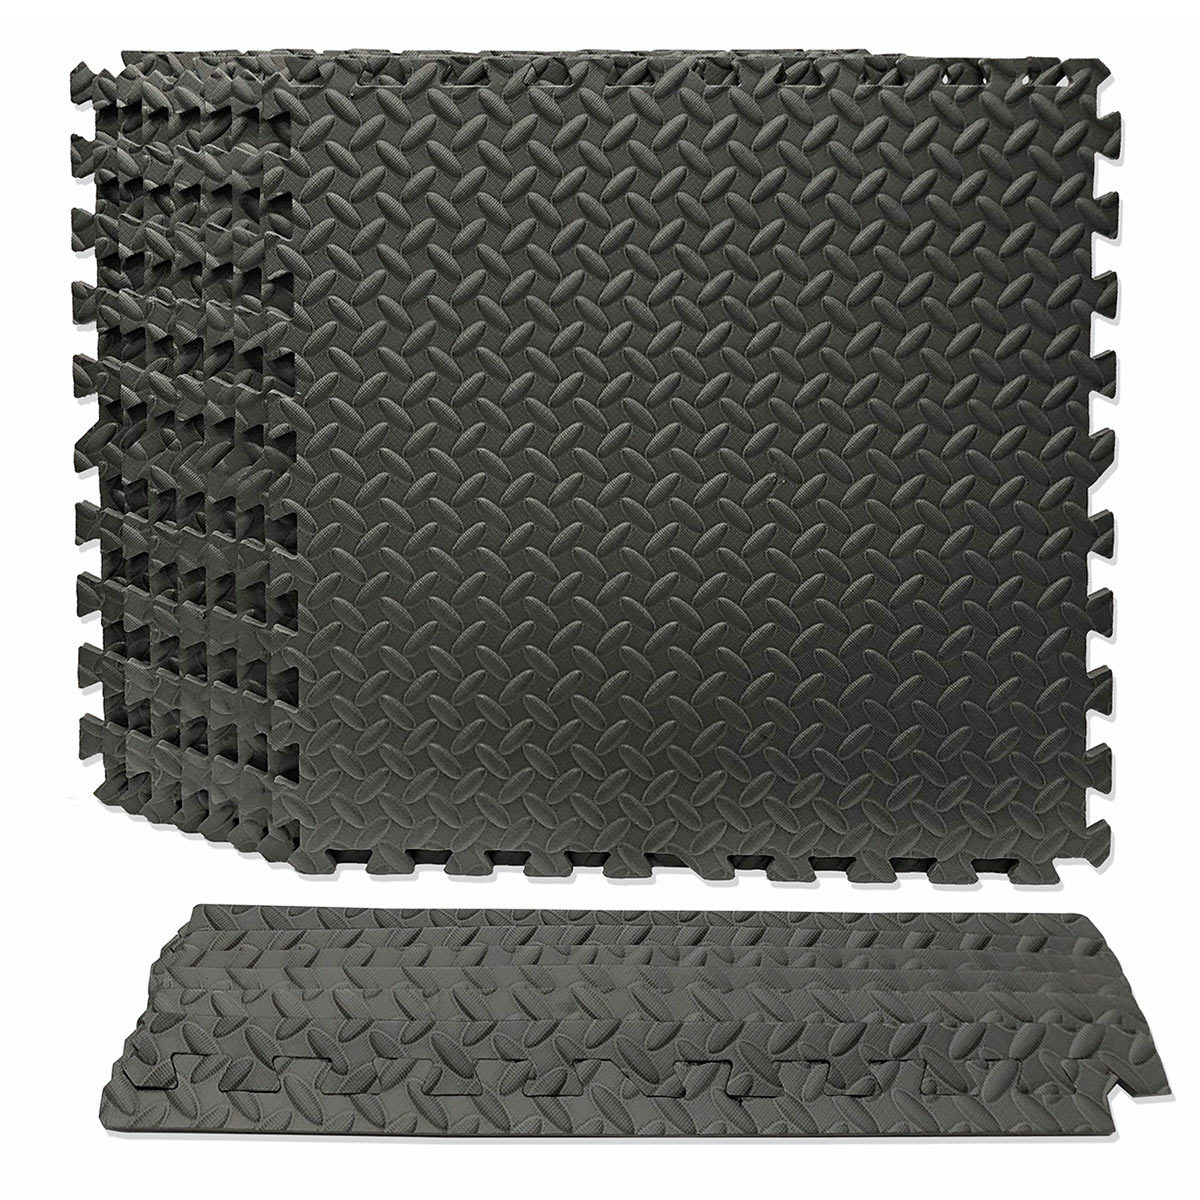 Best Step Microban Interlocking Comfort, Interlocking Rubber Floor Tiles Uk